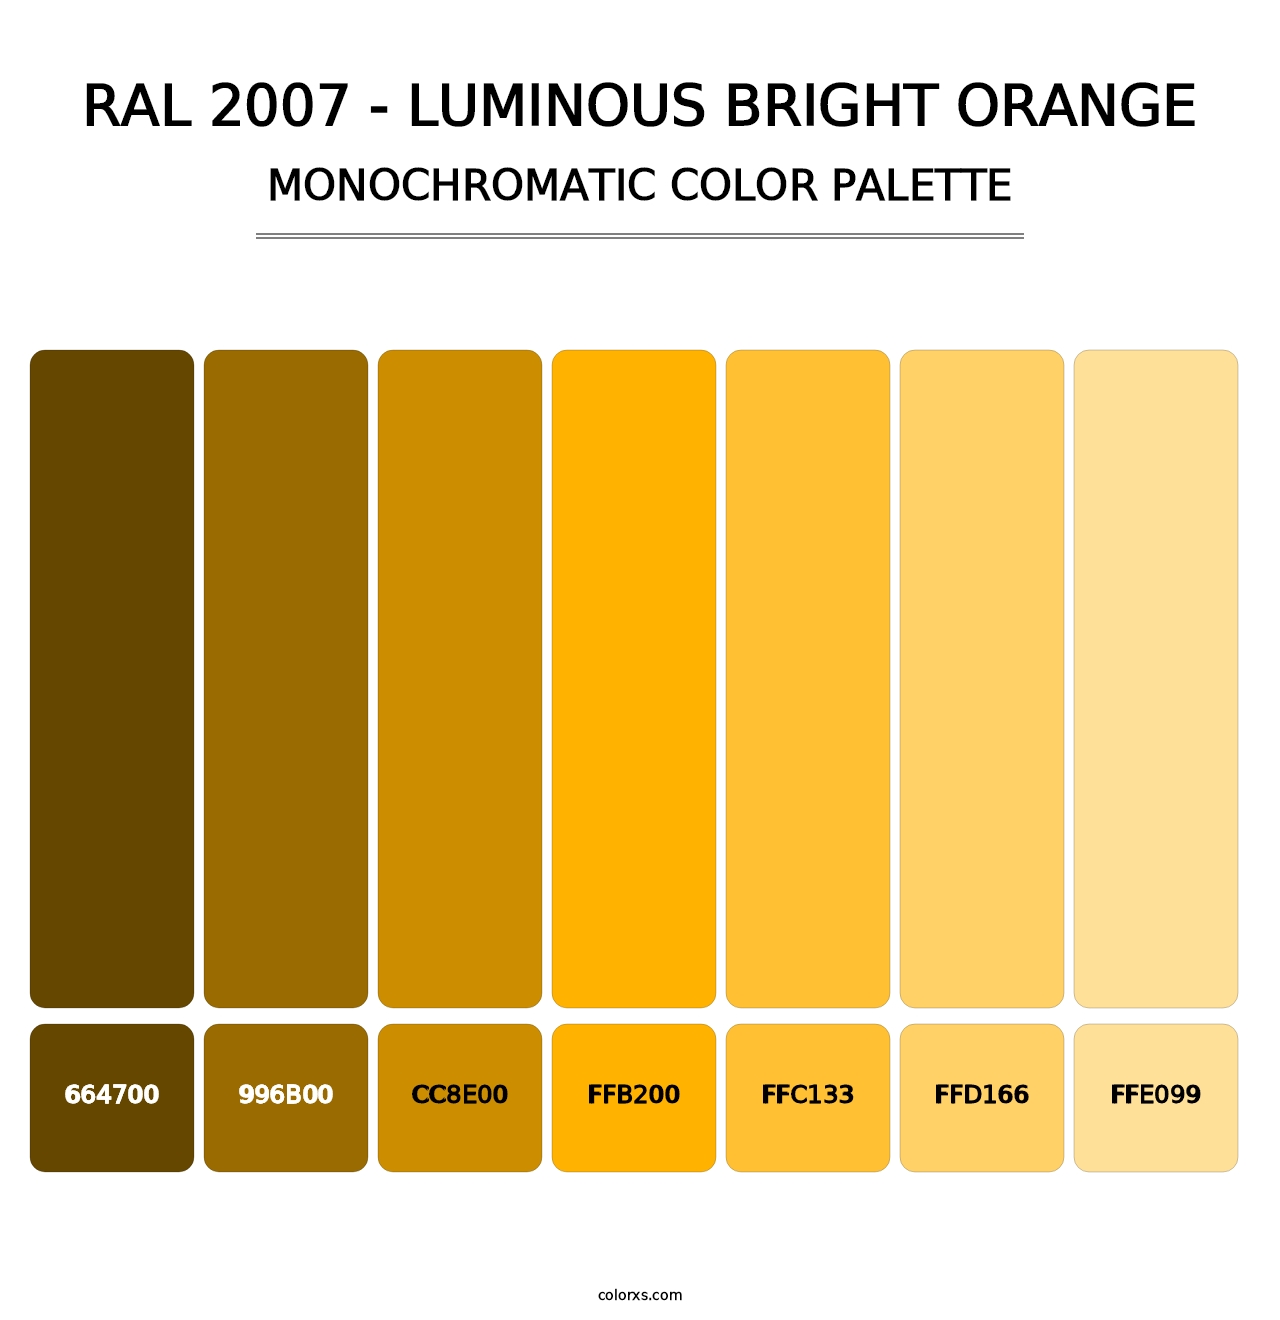 RAL 2007 - Luminous Bright Orange - Monochromatic Color Palette